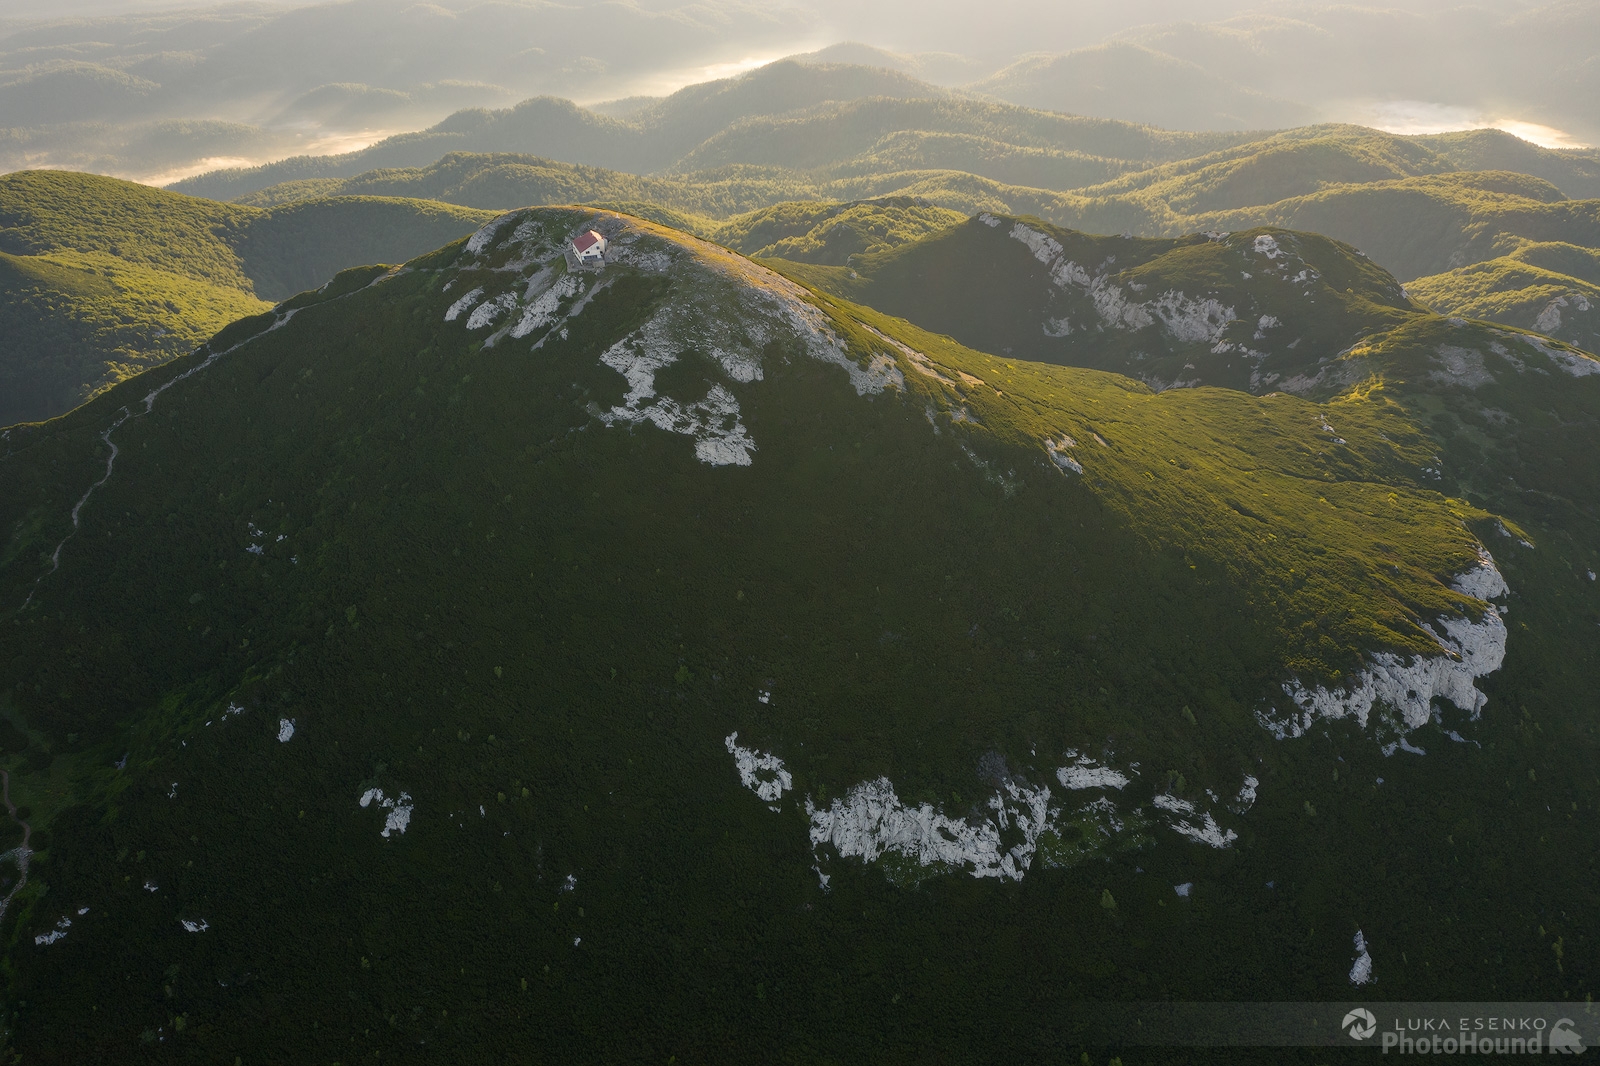 Image of Mt Snežnik (Snow Mountain) by Luka Esenko